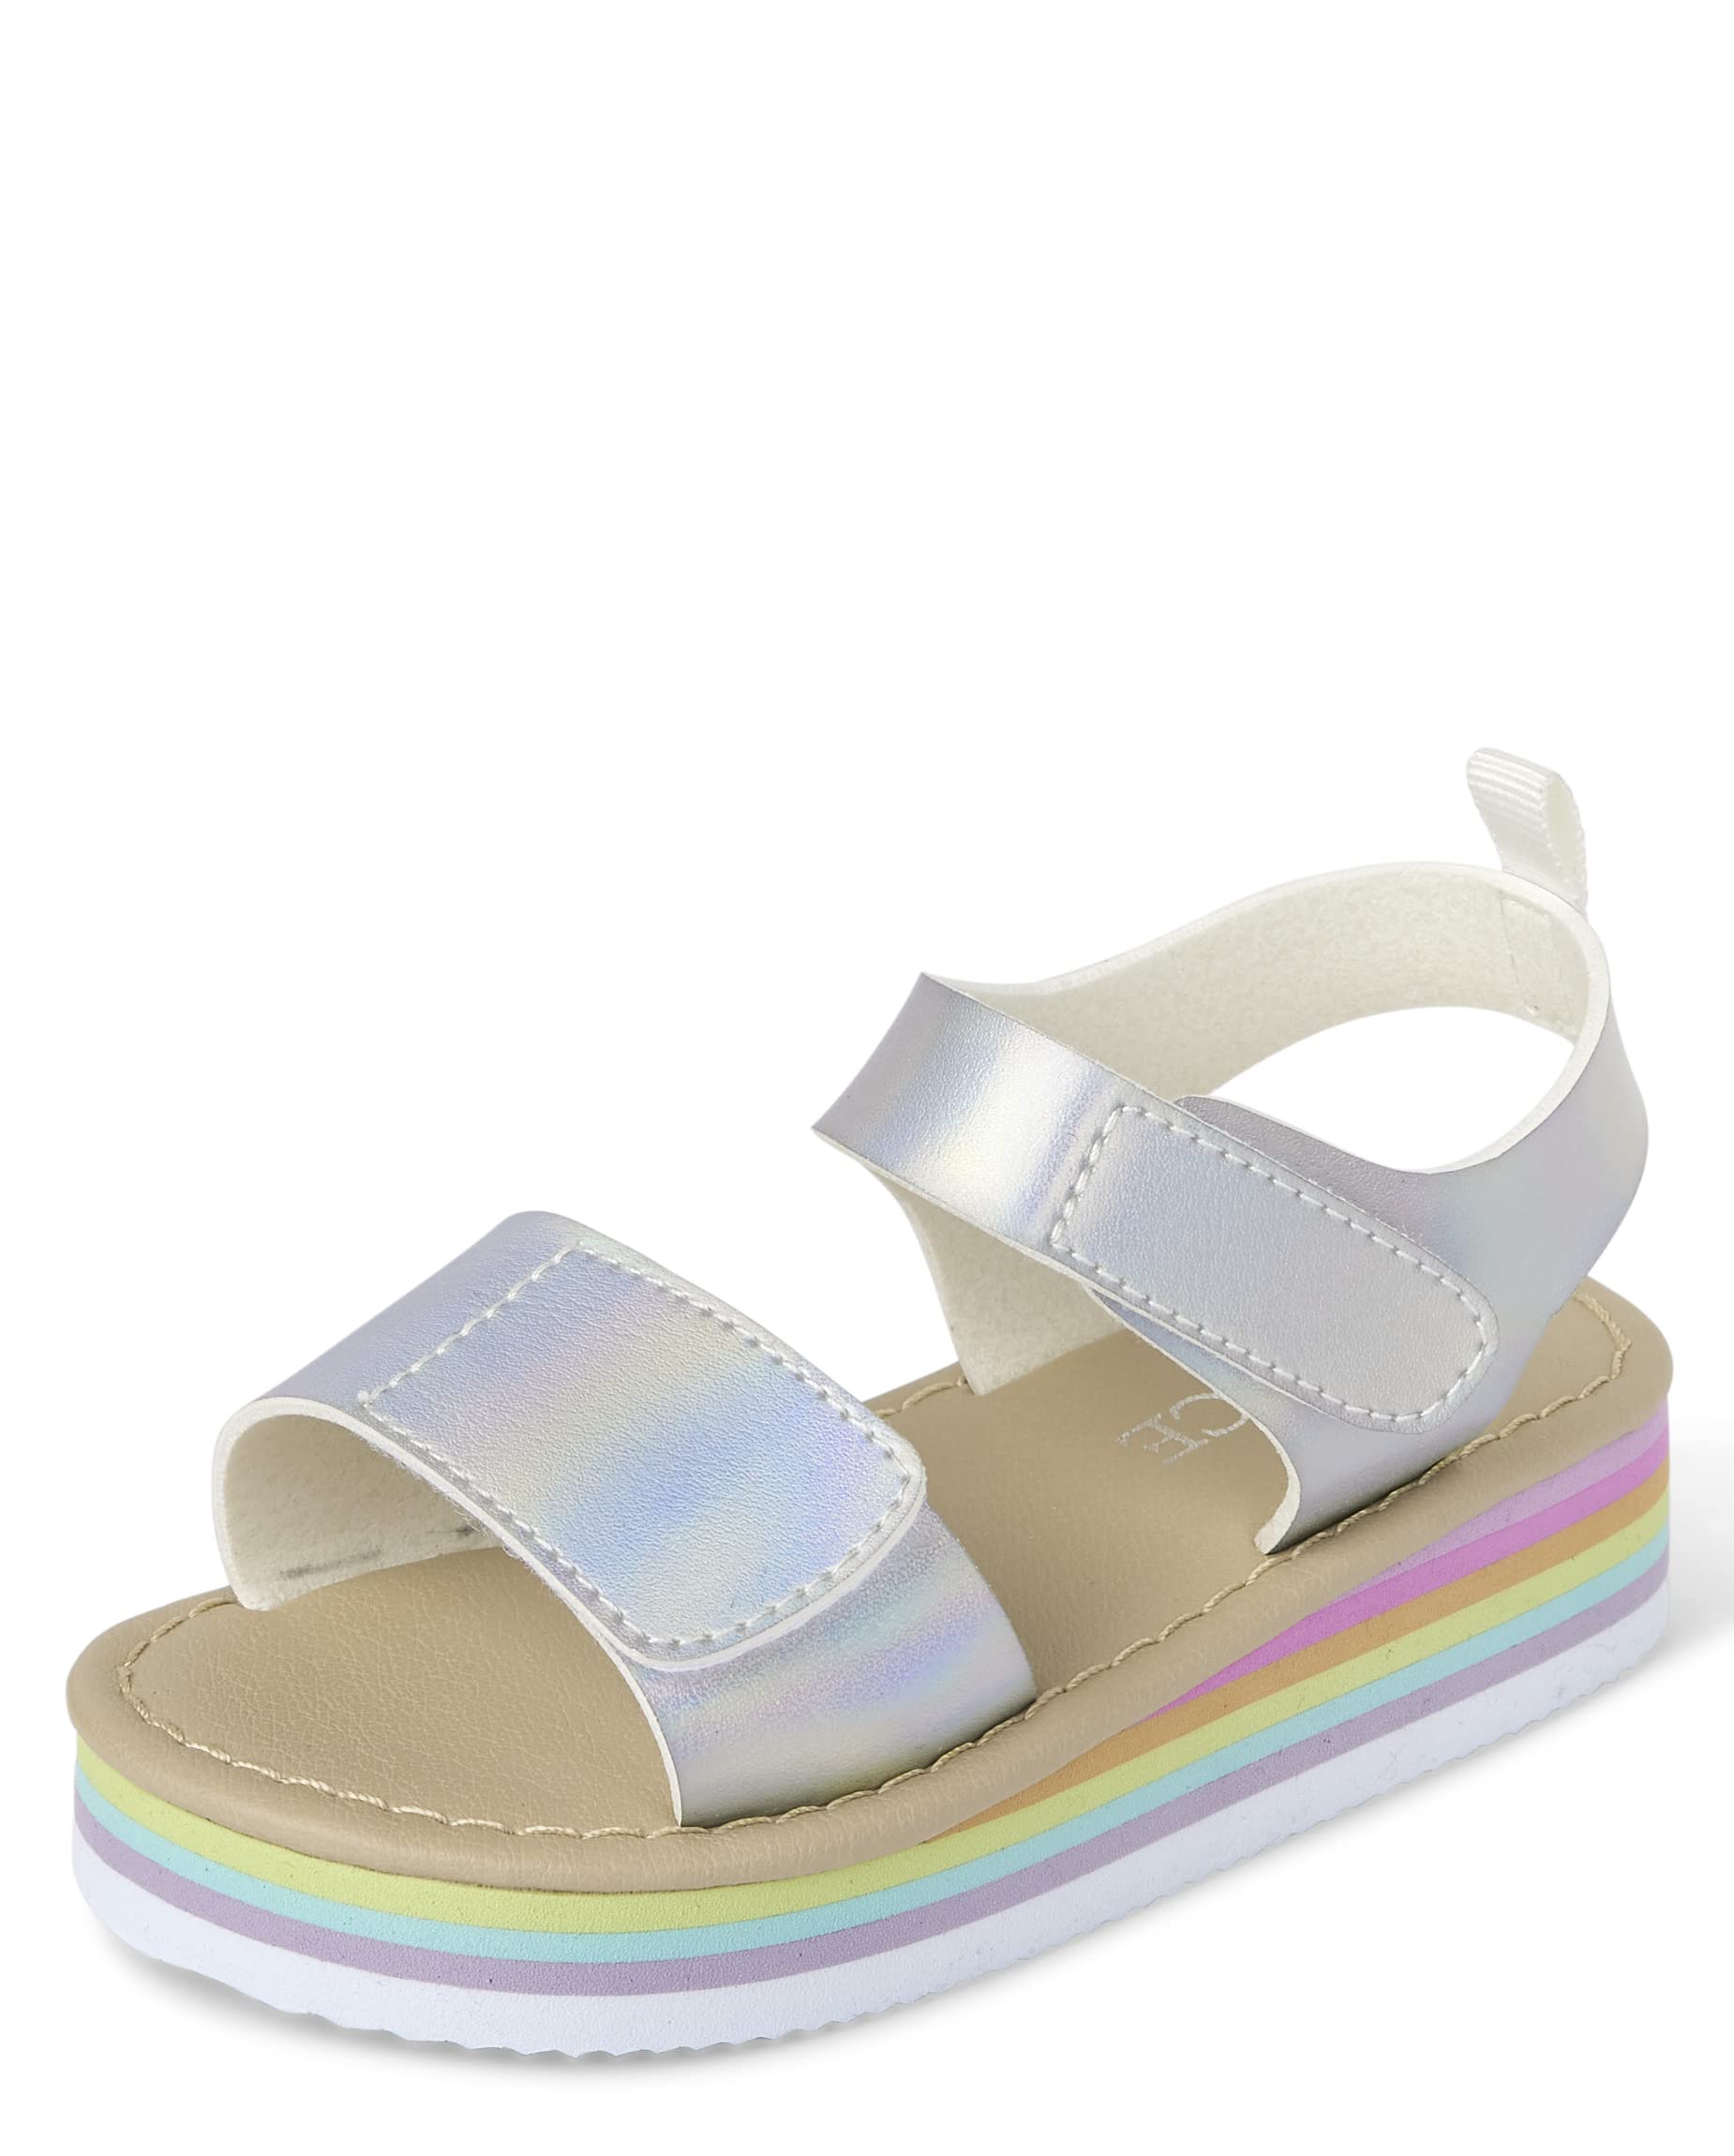 The Children's Place Toddler Girls Platform Sandals, Silver, 7